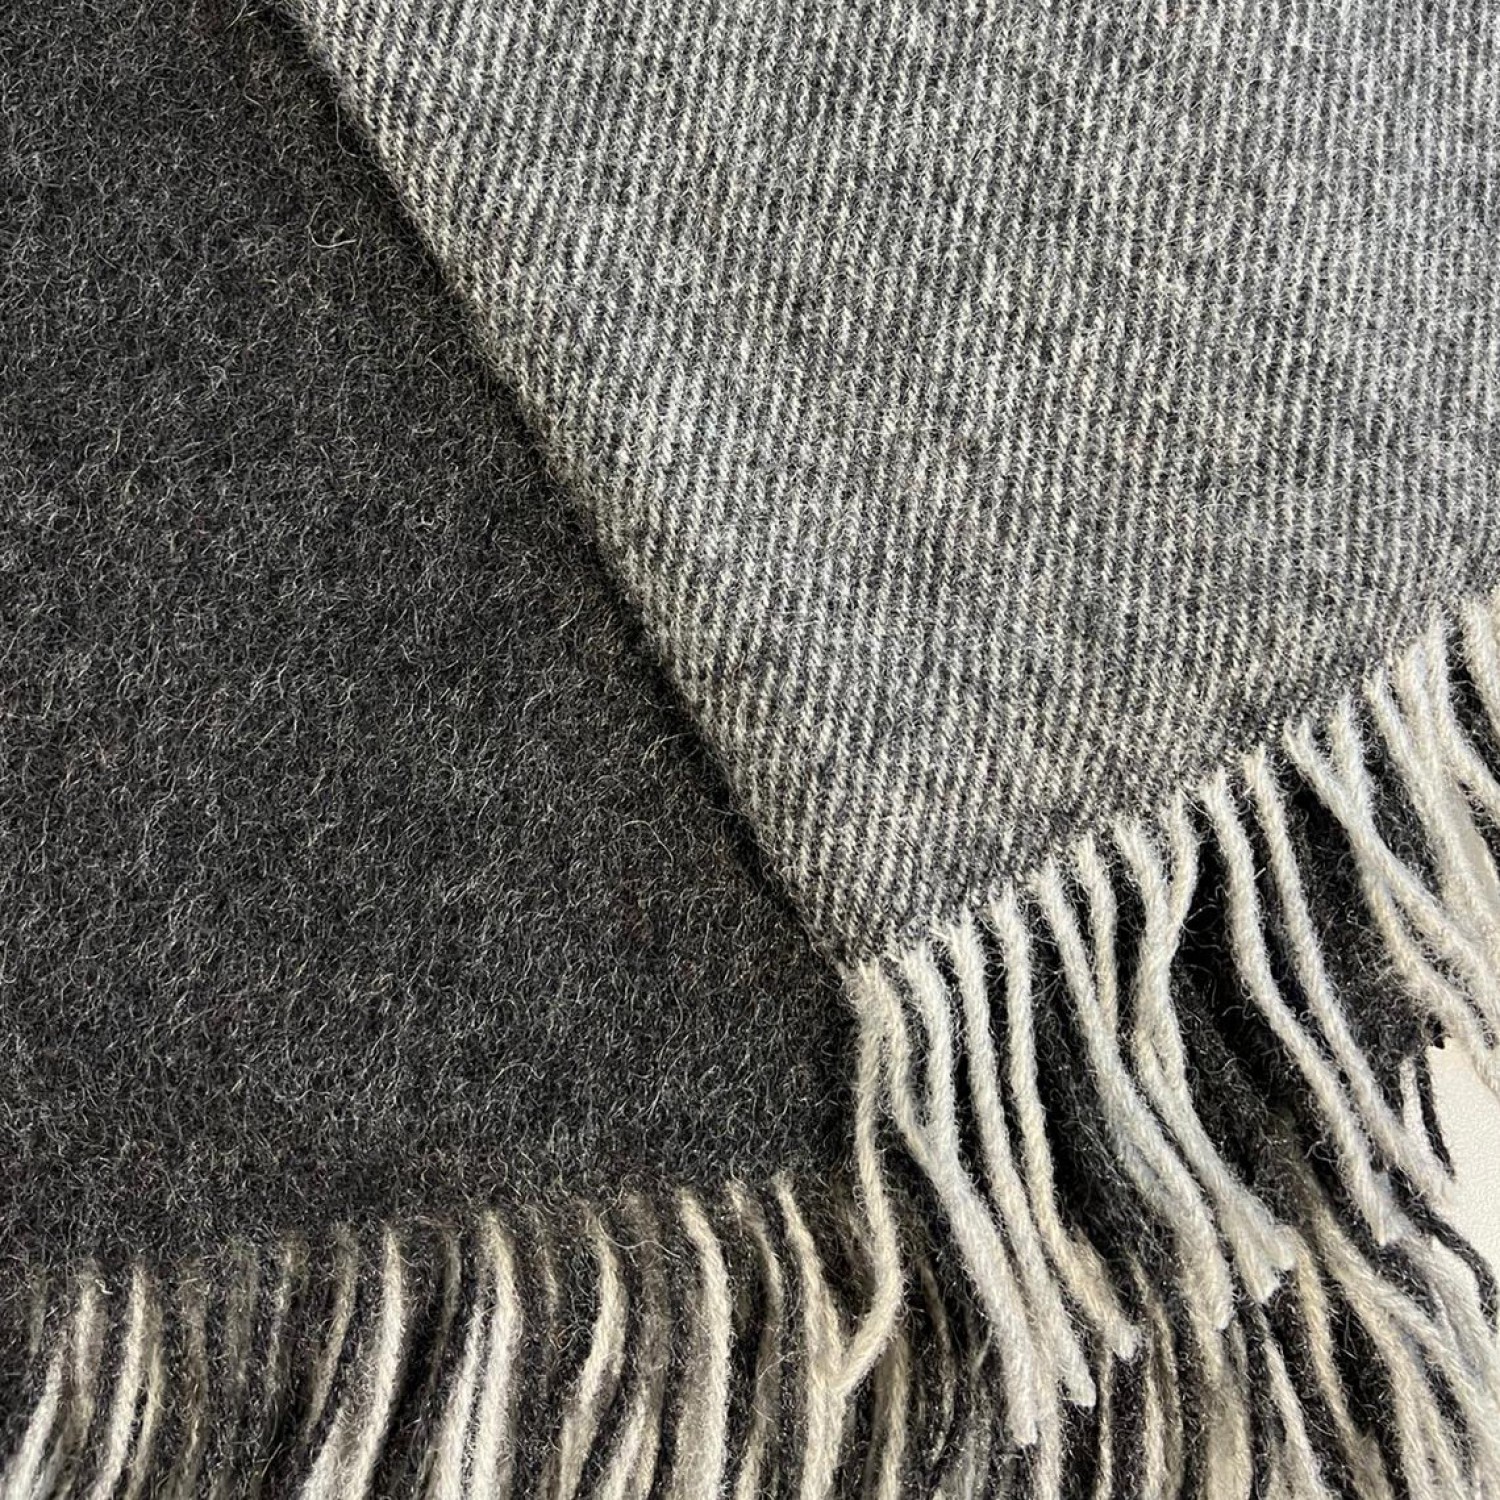 [-30%] Gotland wool blanket